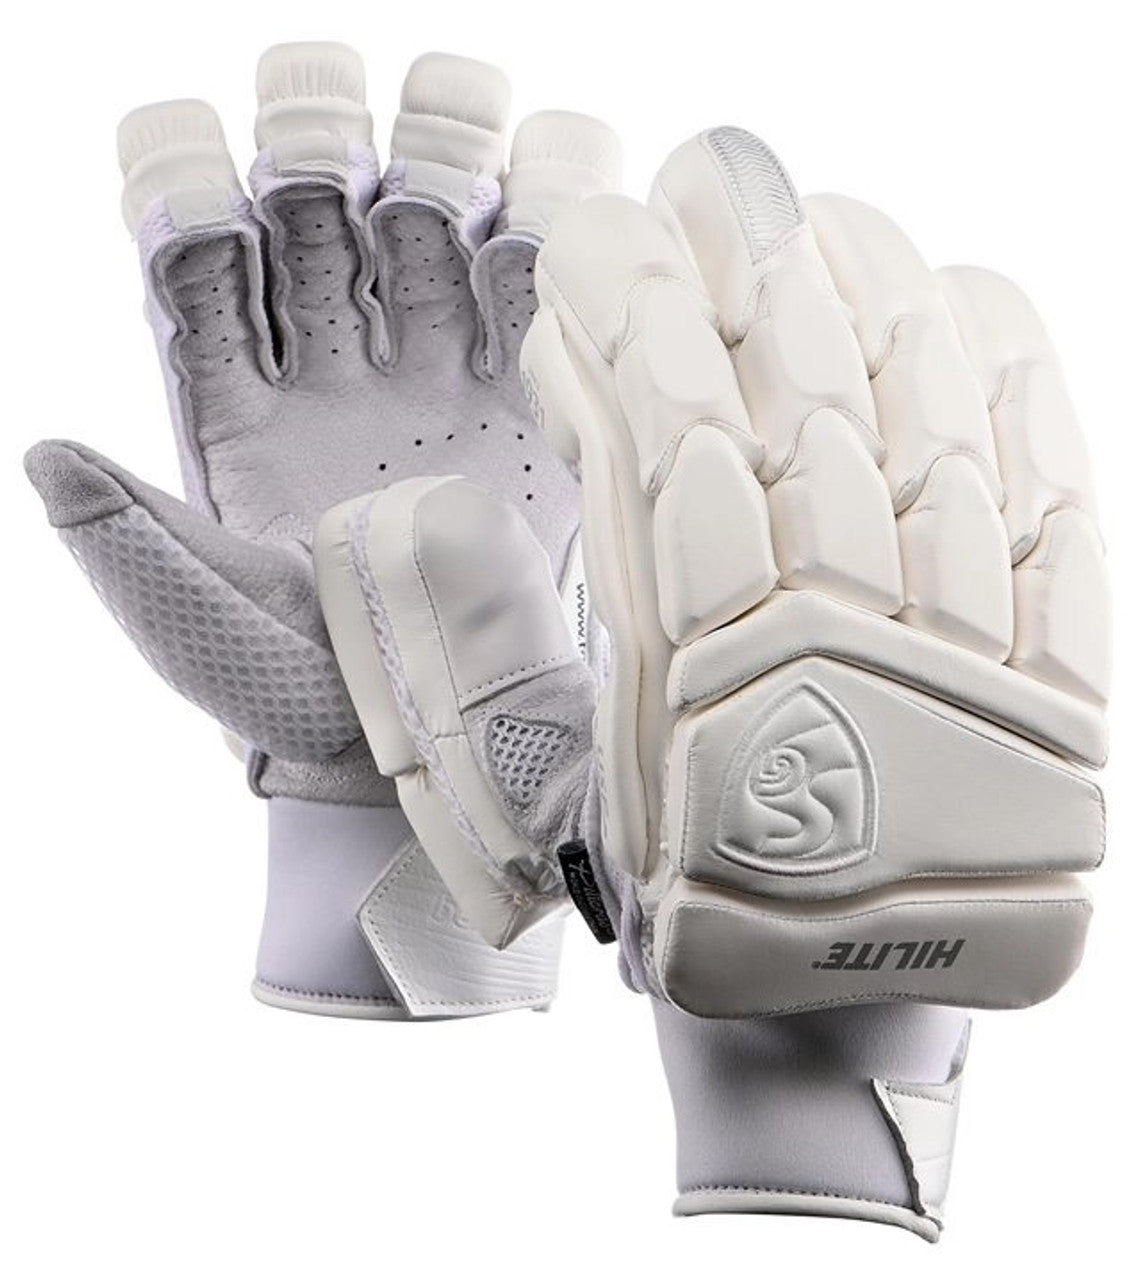 SG batting Gloves, Model Hilite White, Adult